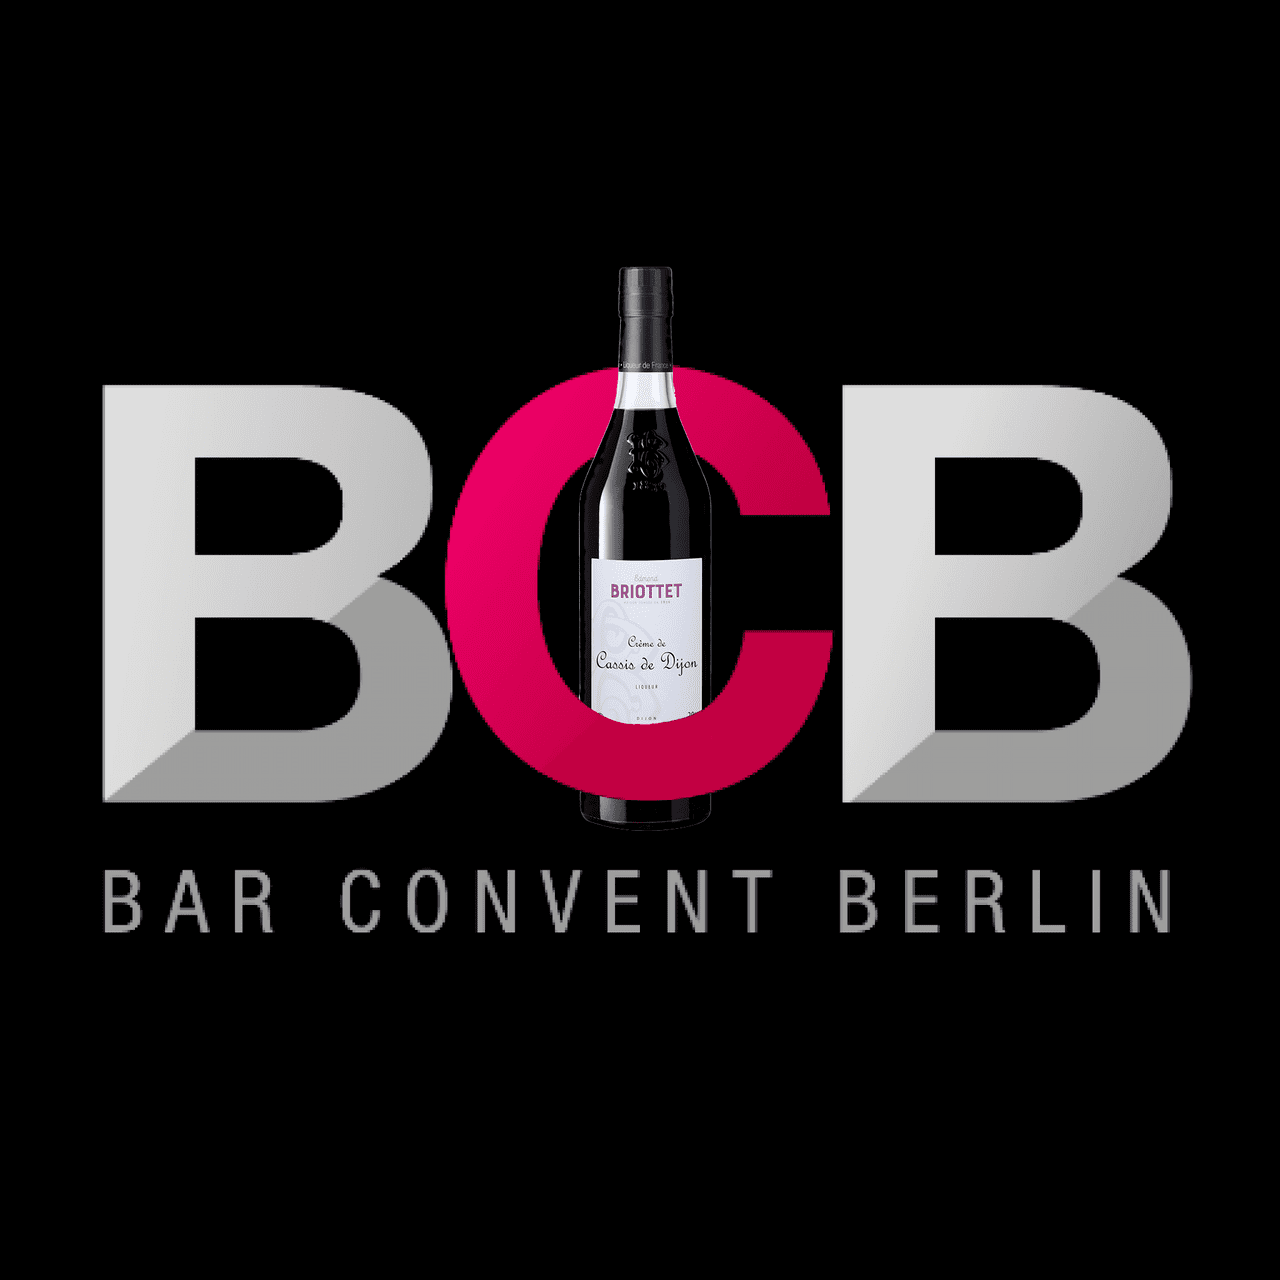 Bar Convent Berlin Briottet